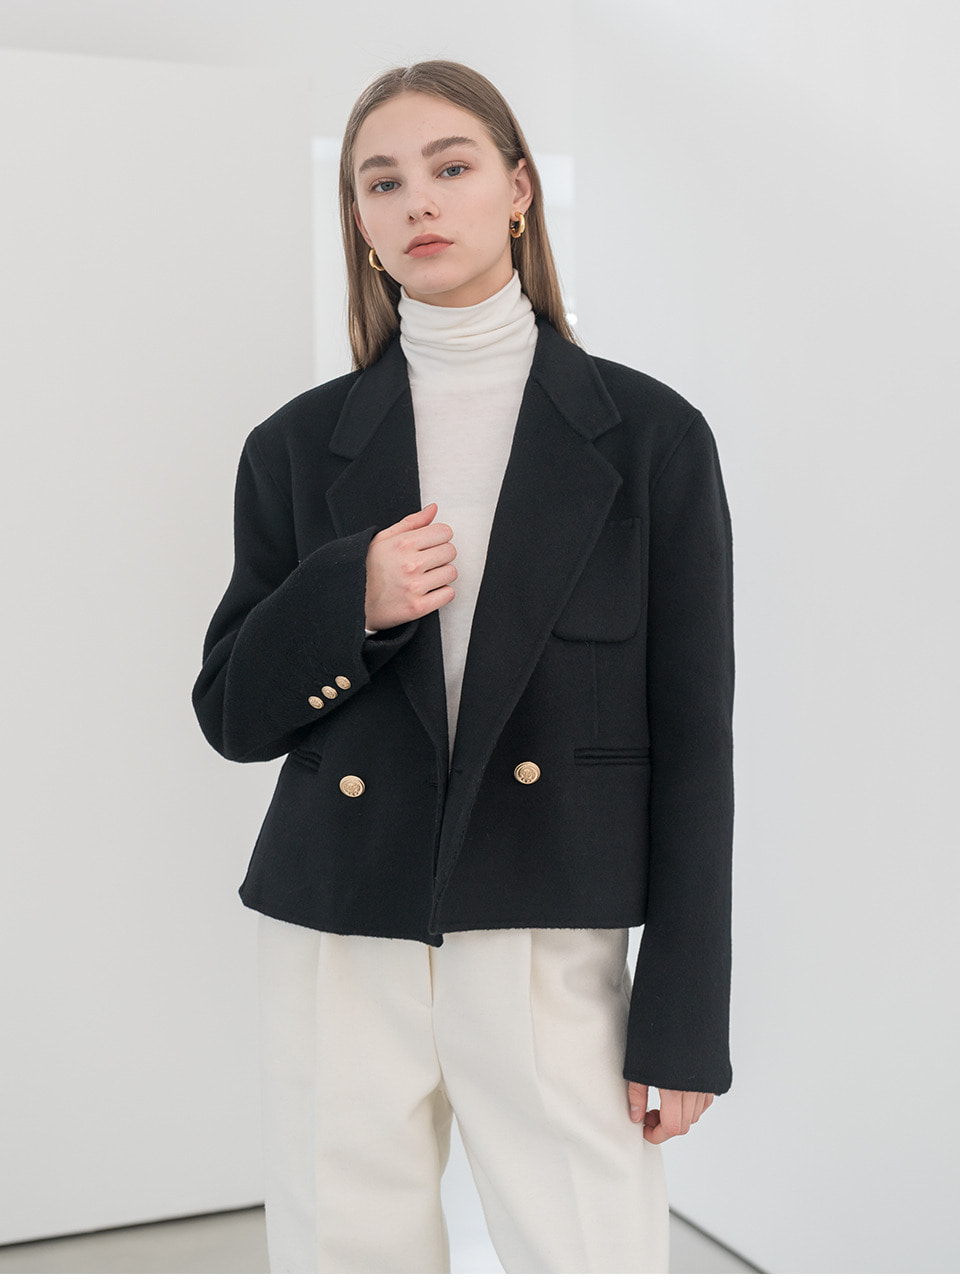 Premium handmade wool crop double jacket in black